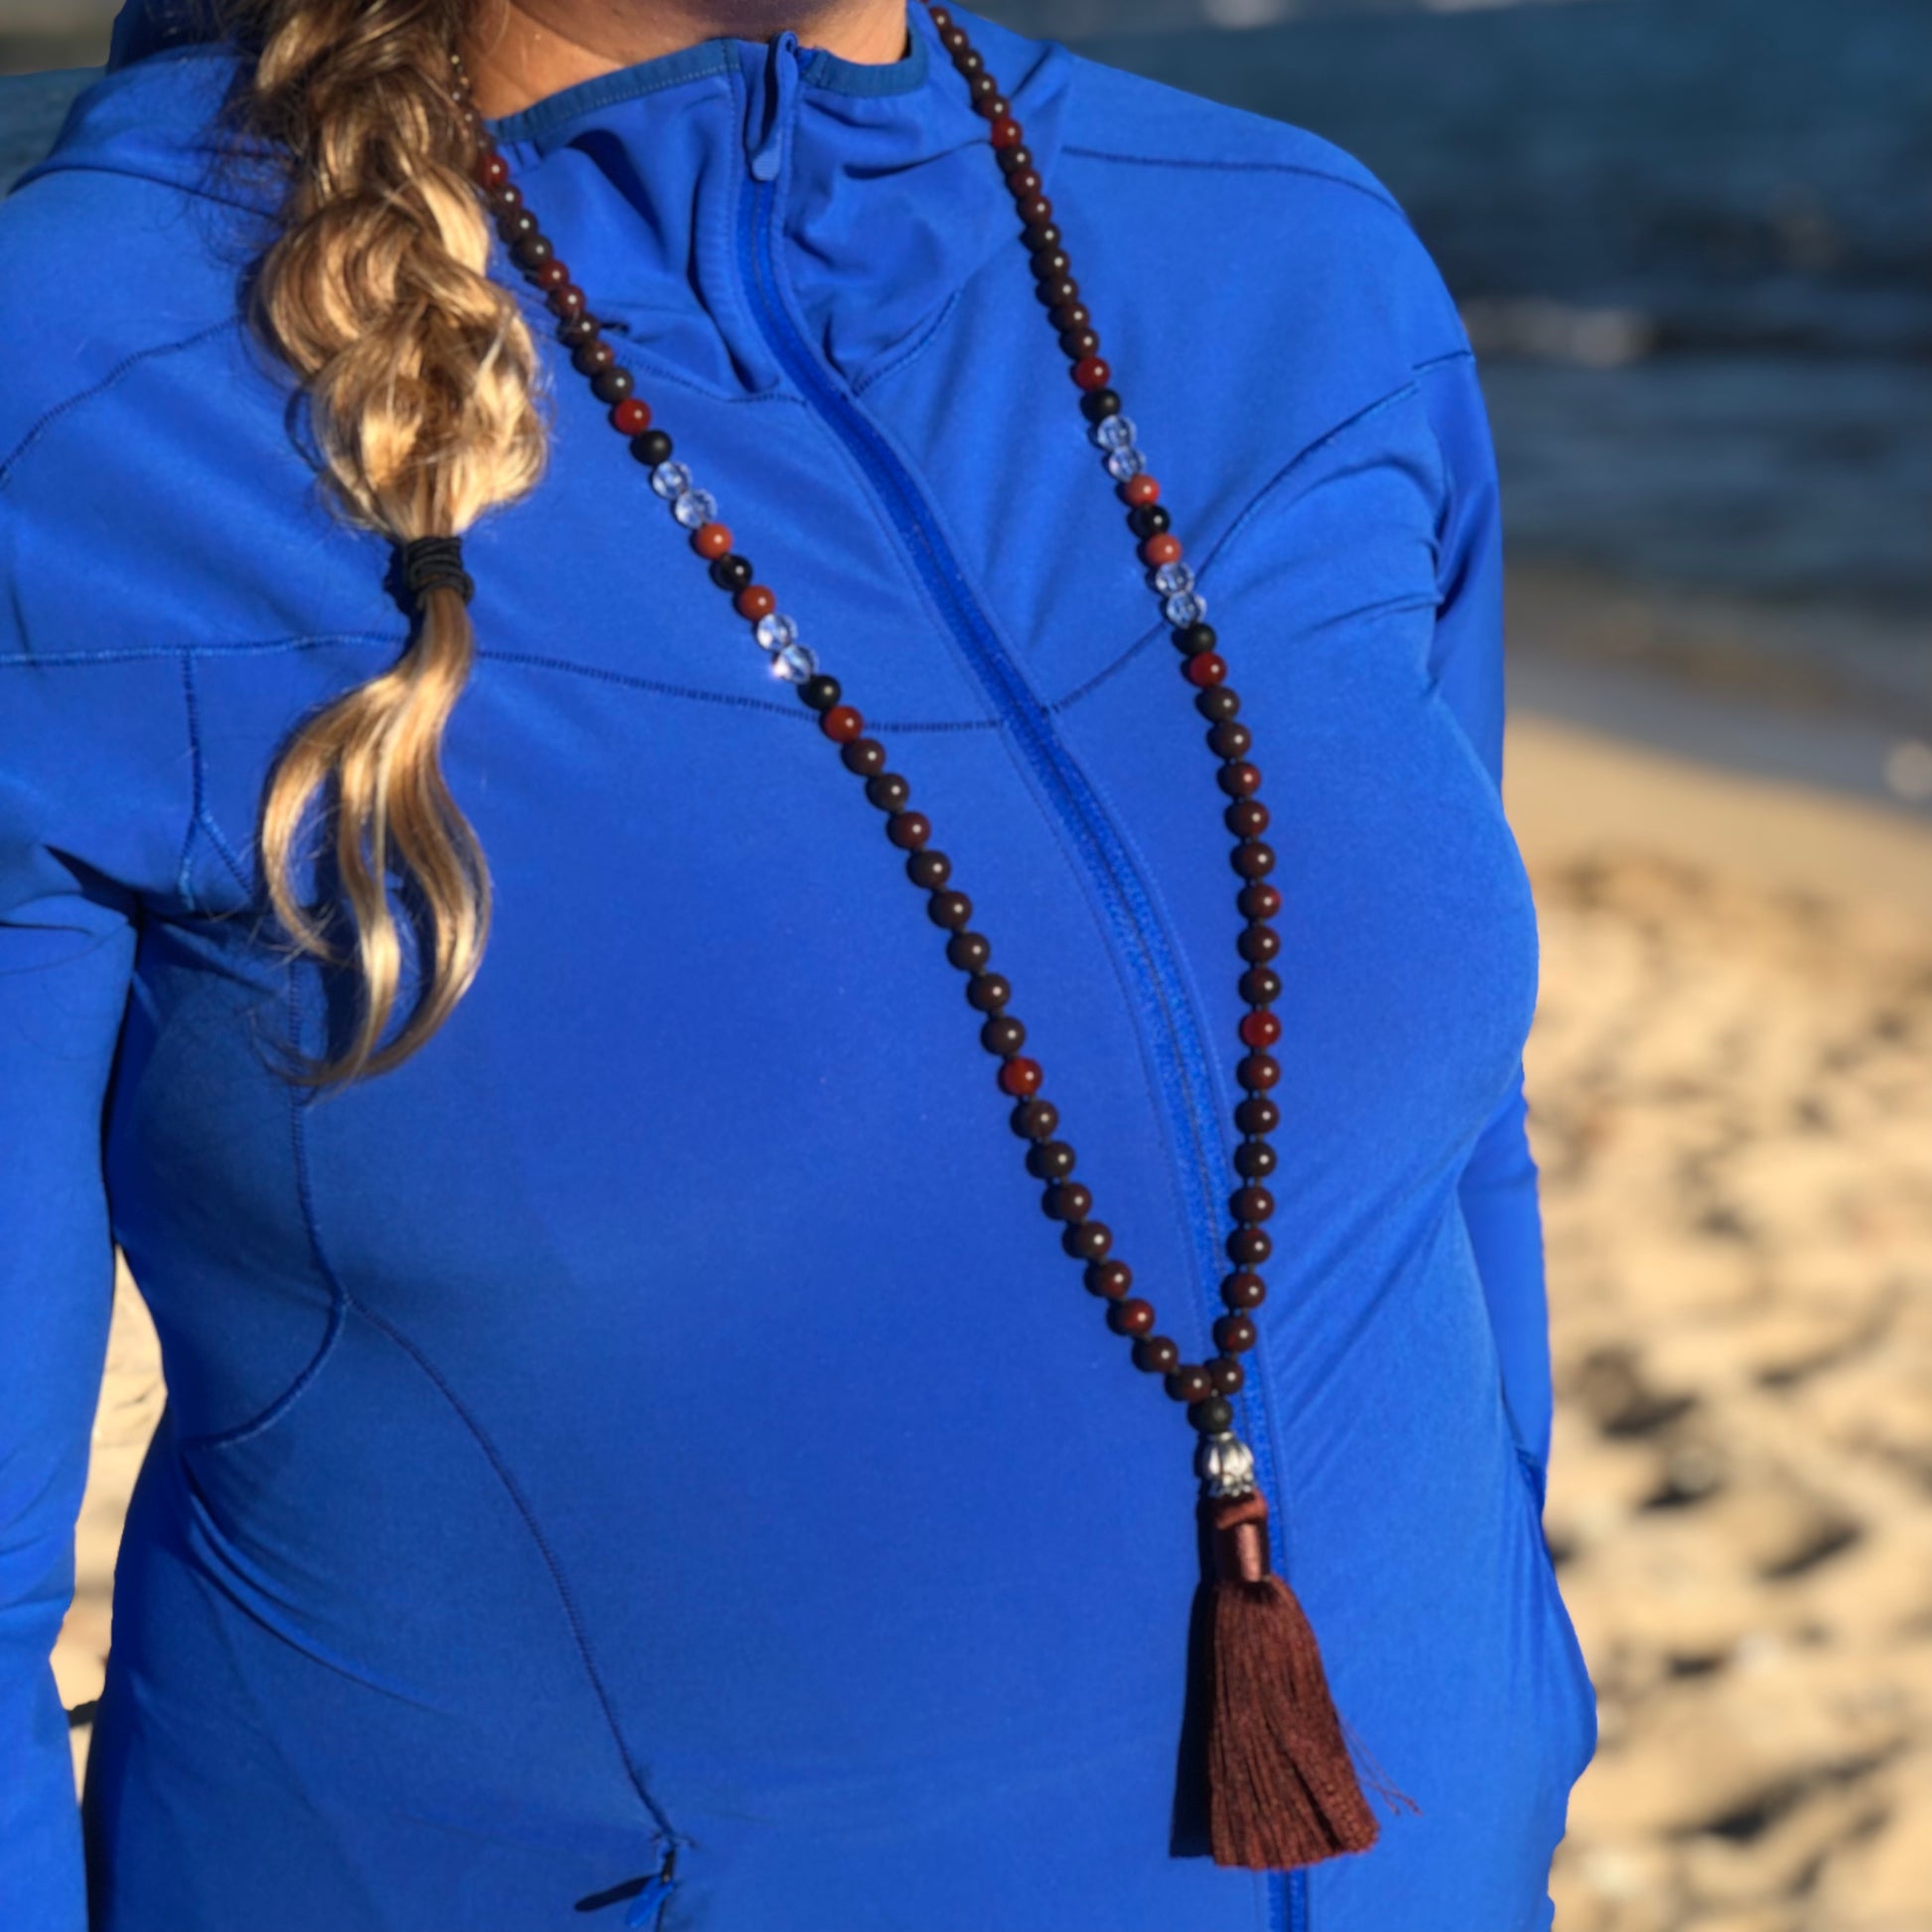 women at beach wearing red jasper necklace with tassel